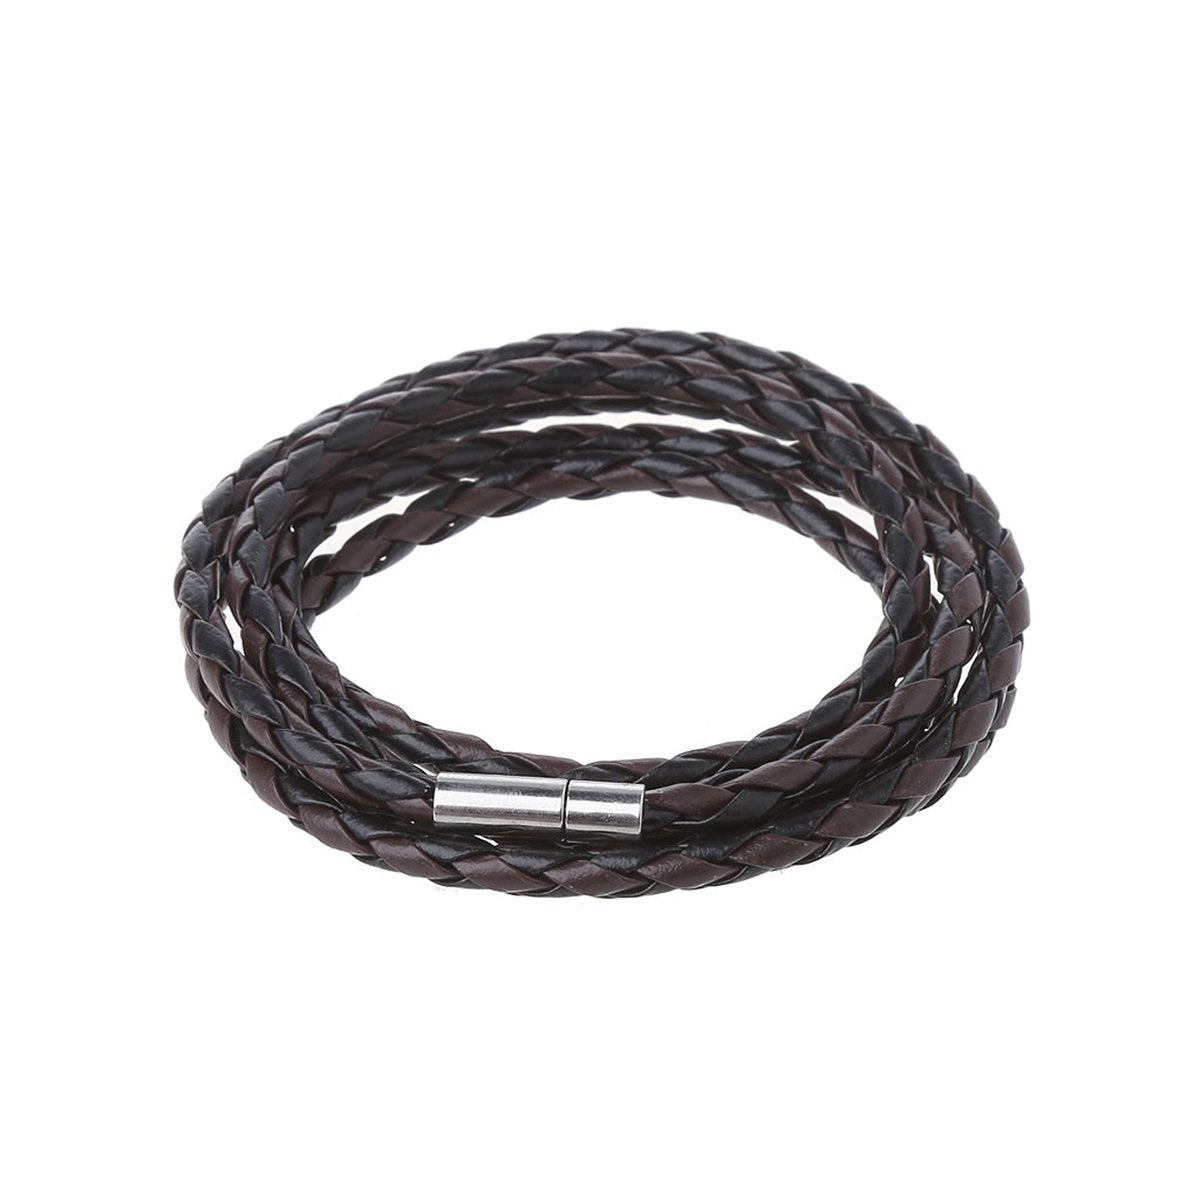 Rope Braided Crafted Black Leather Wrist Band Strand Bracelet Unisex